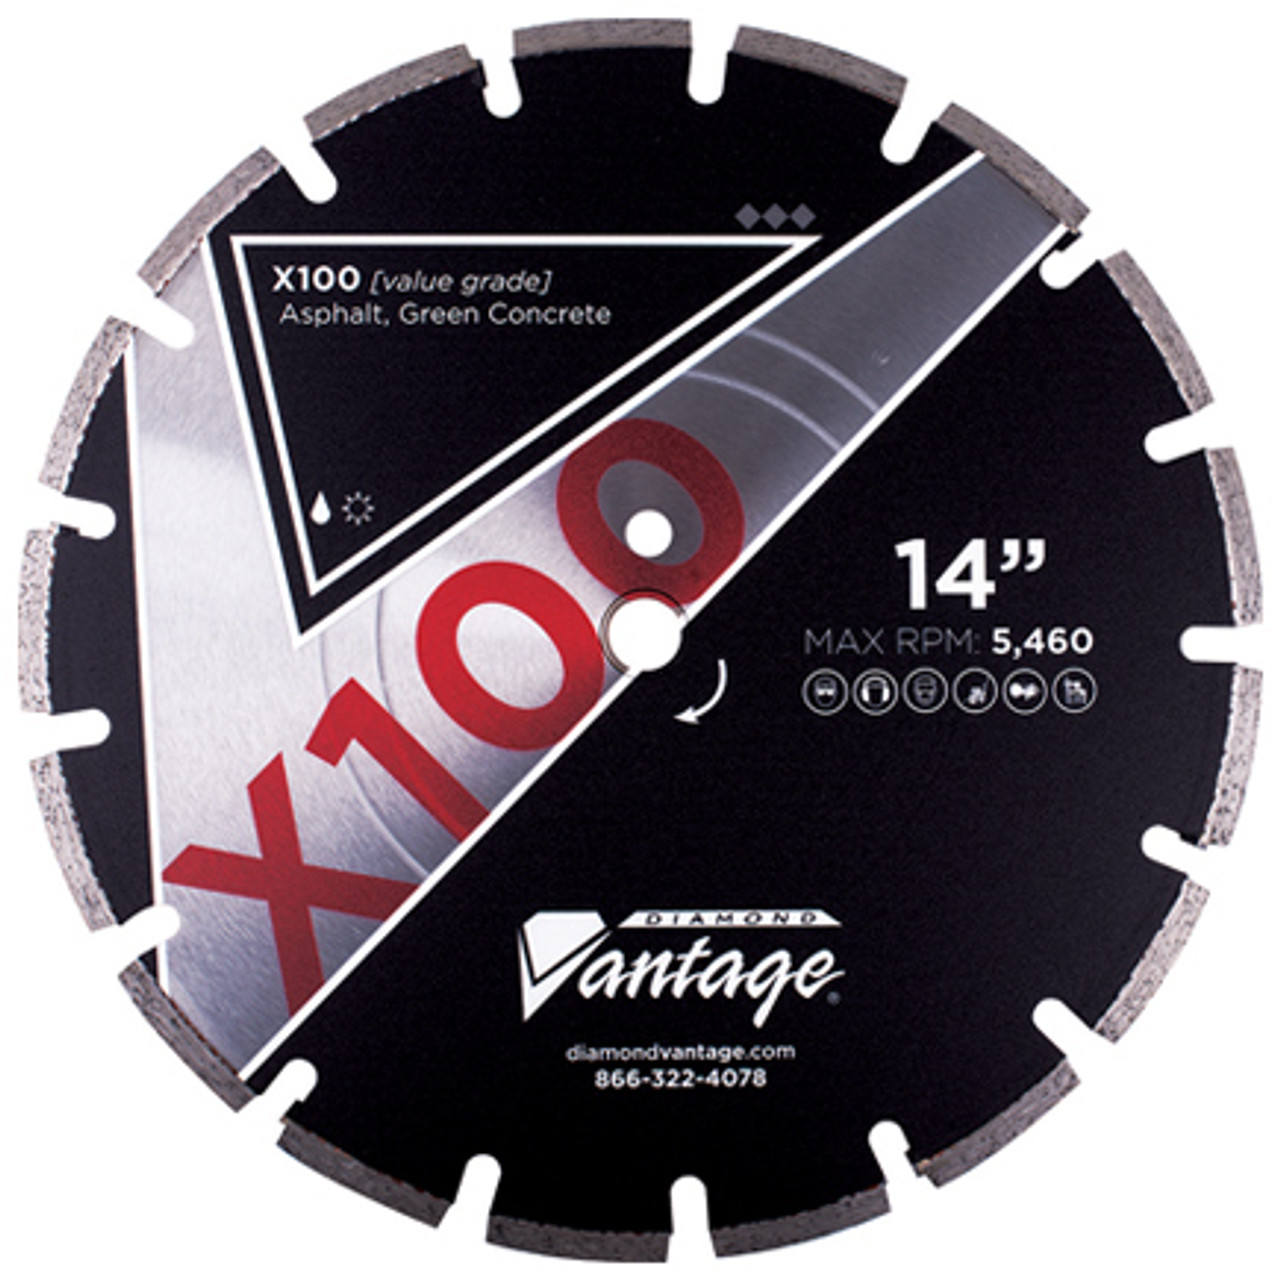 Diamond Vantage X100 12 x 125 x 20mm Asphalt, Heavy Duty Grade, Segmented Blade